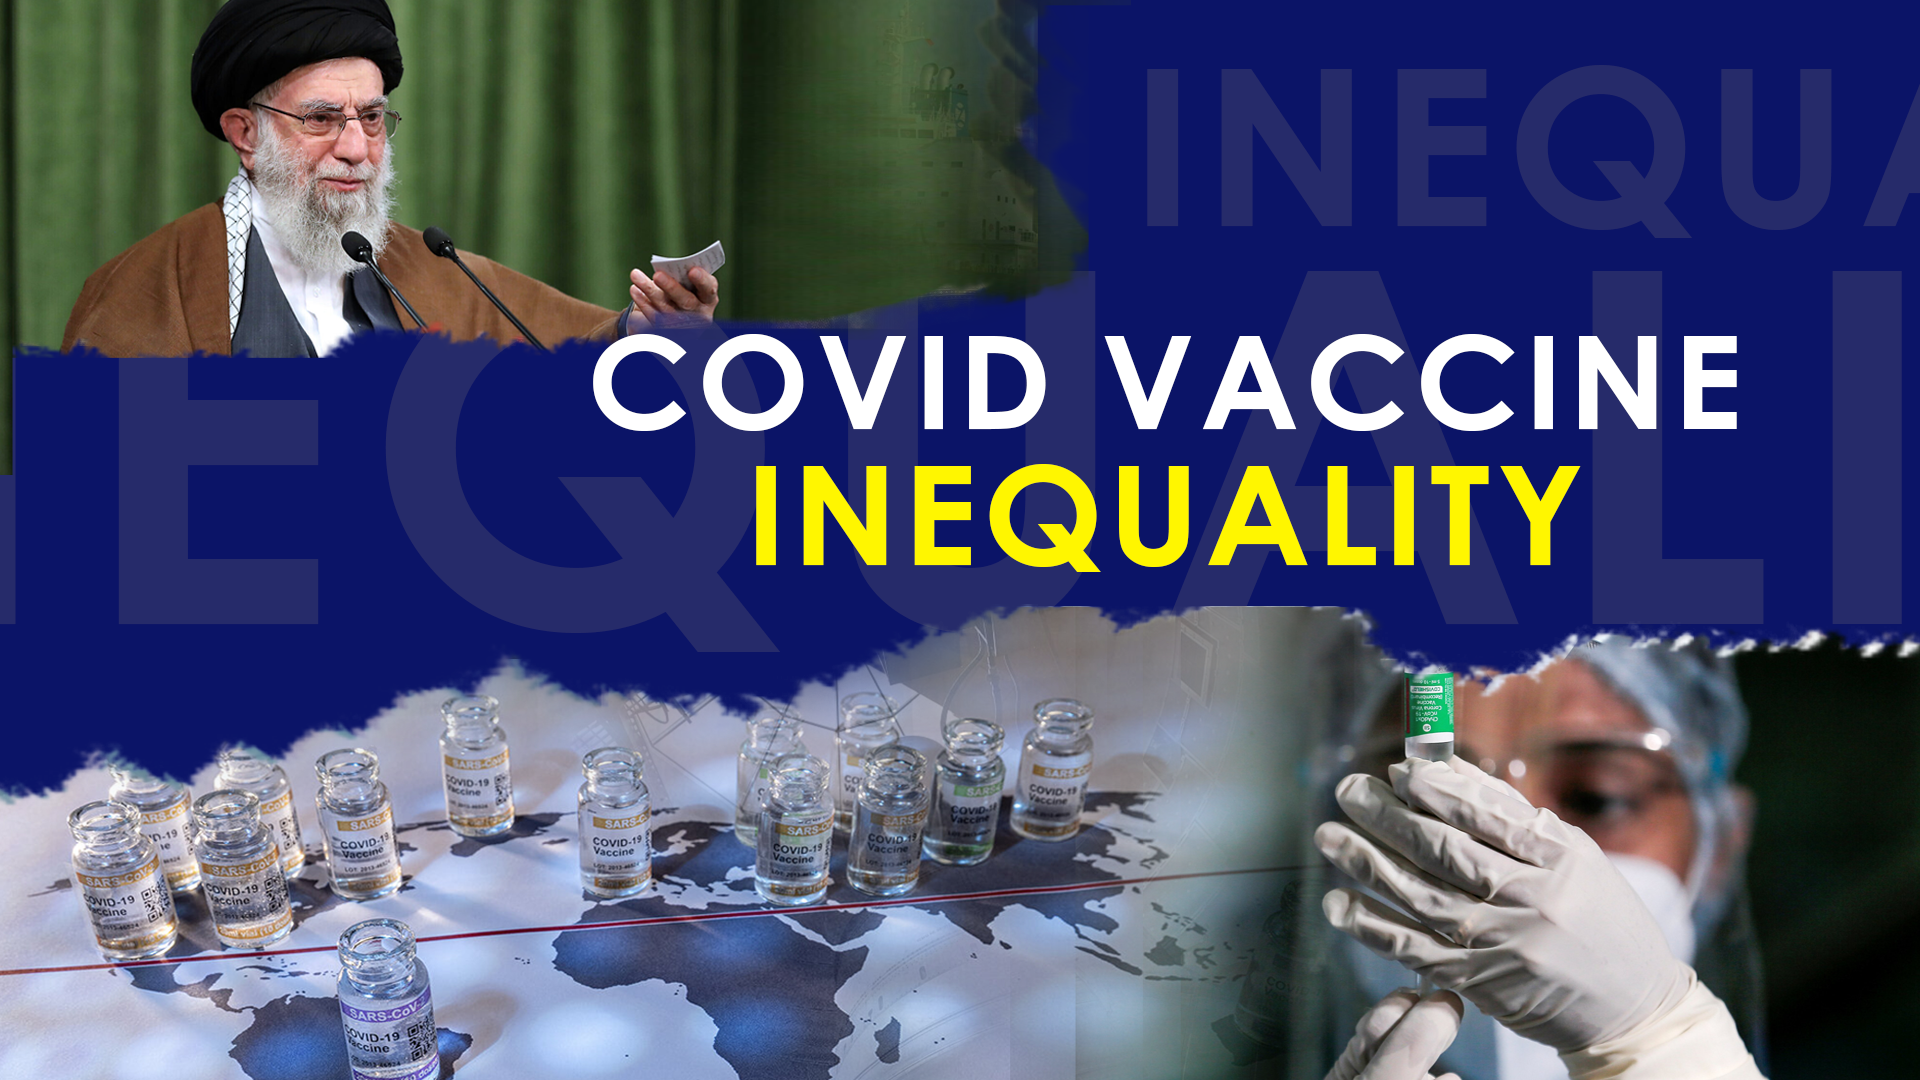 Iran's Leader on Covid-19 vaccine inequality